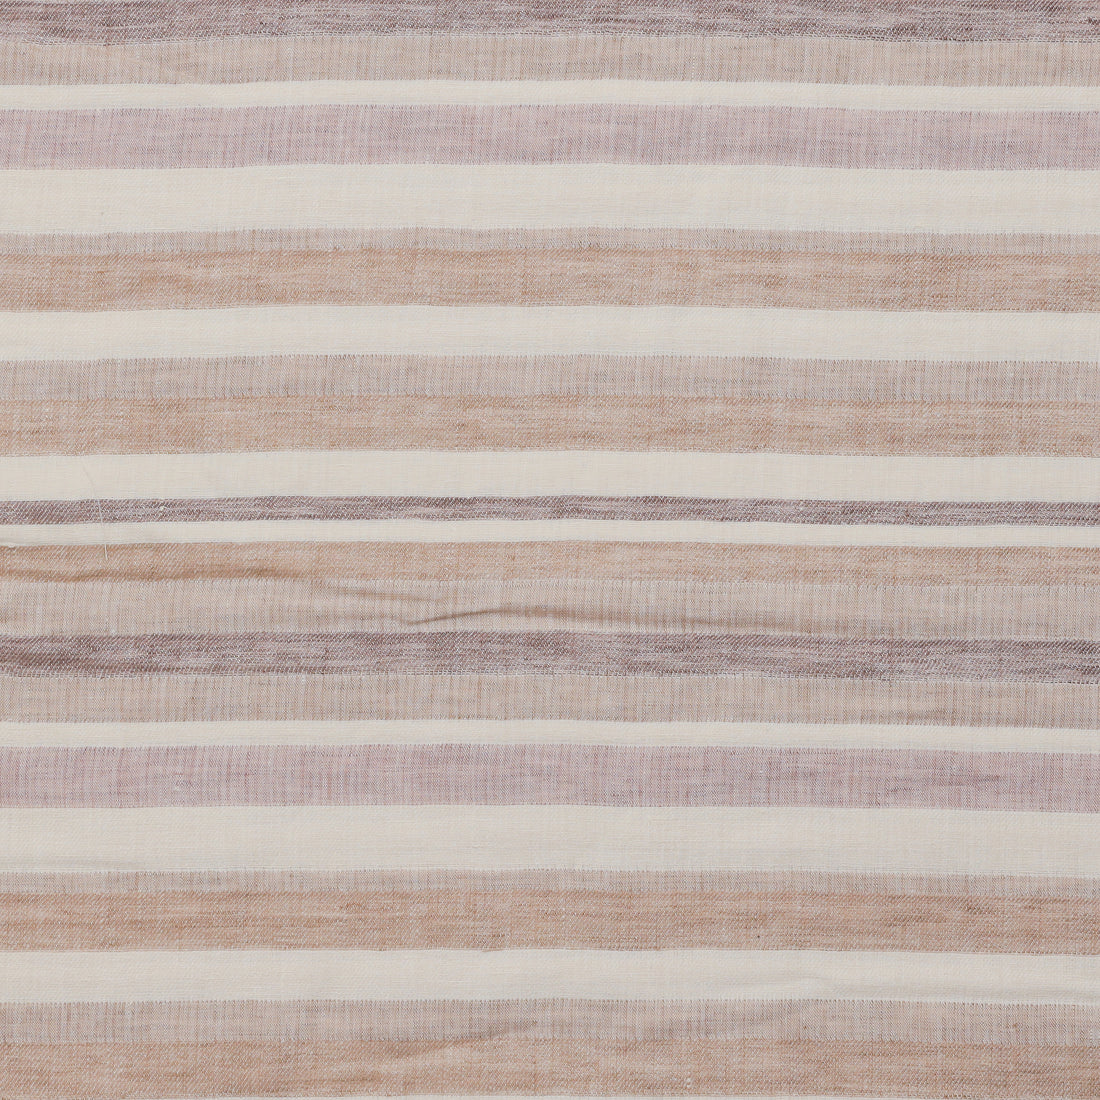 Linen Blend - Jacquard Stripe - Natural